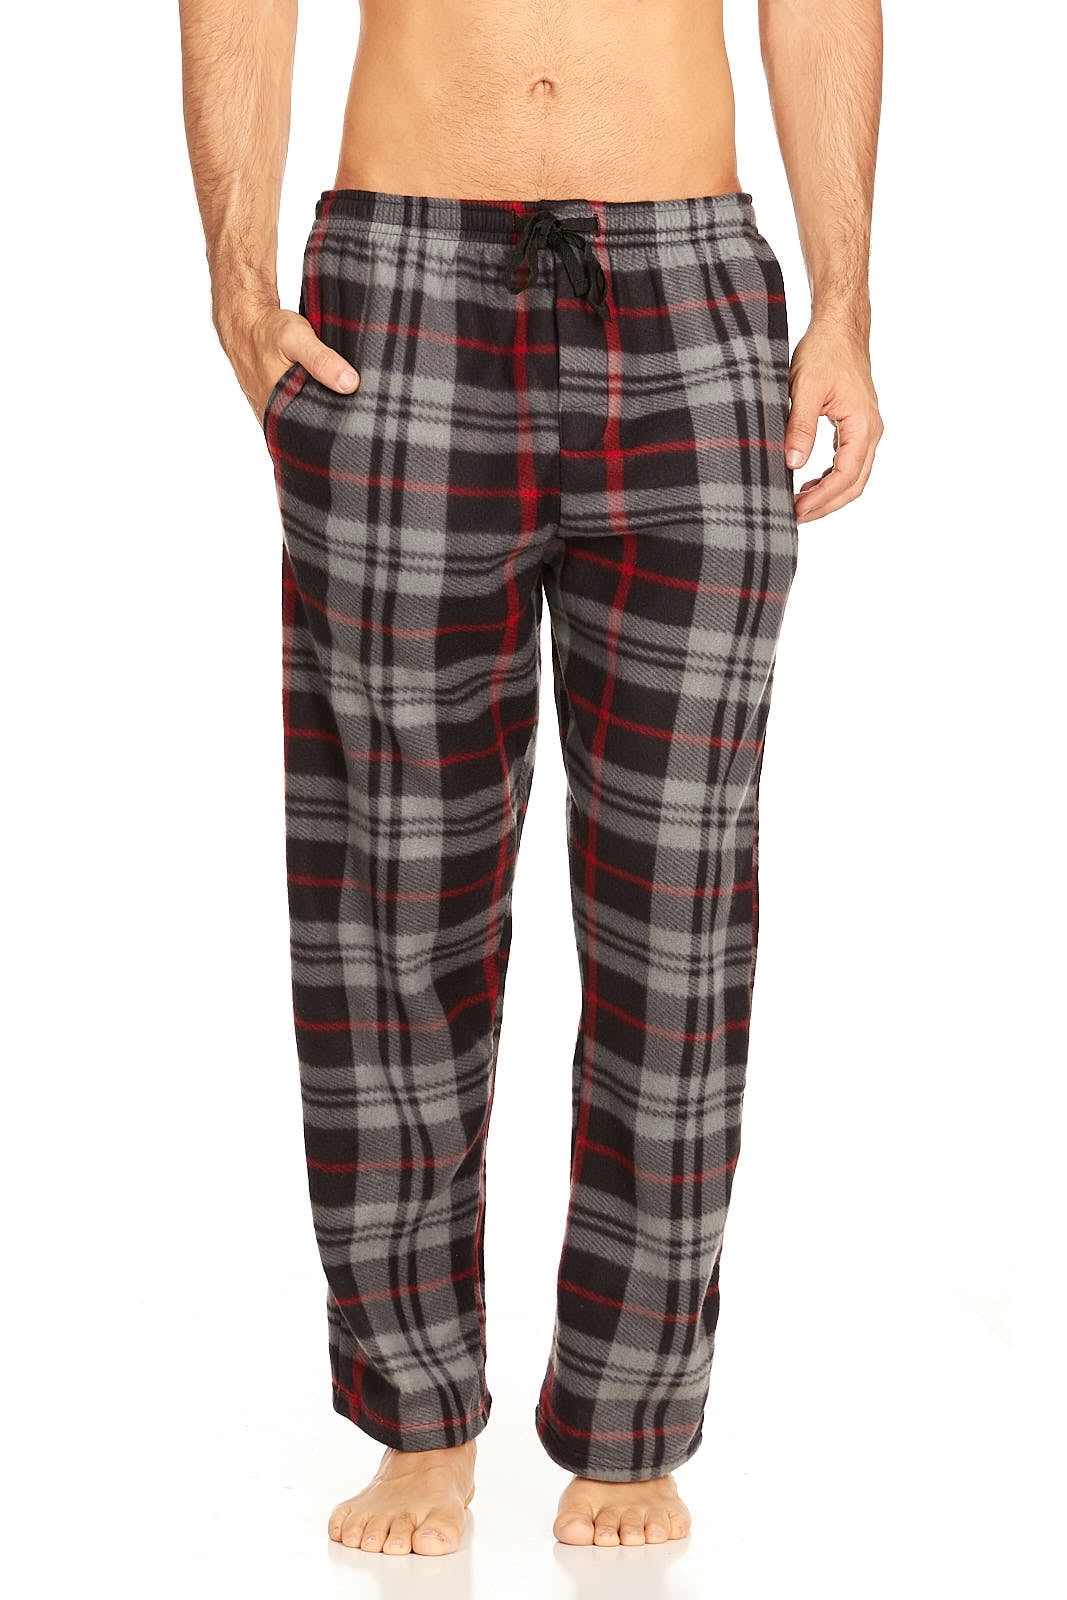 DARESAY Multipack of Men’s Microfleece Pajama Pants/Lounge Wear with Pockets 